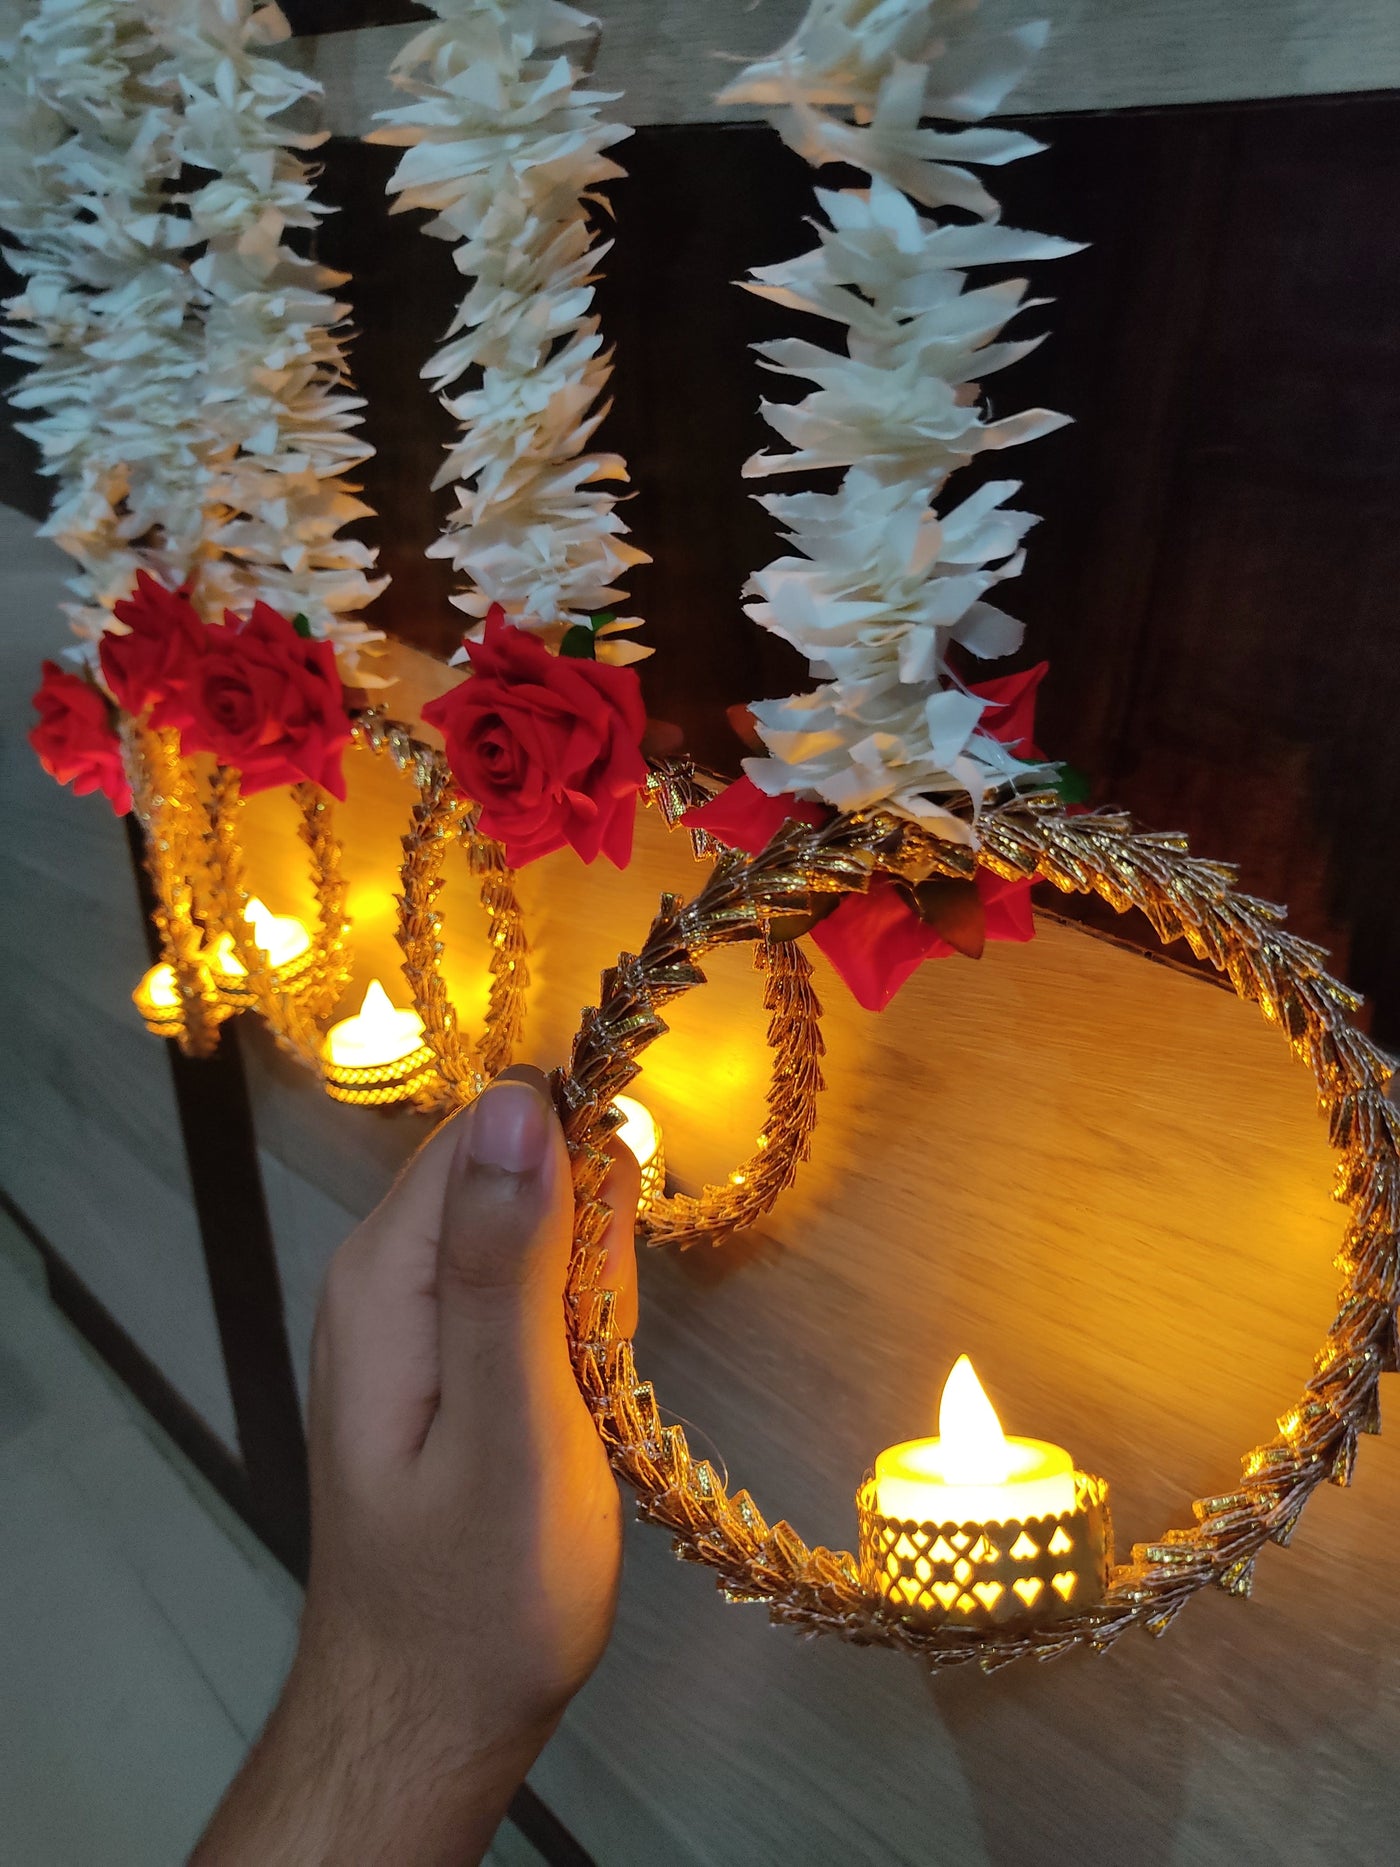 Lamansh marigold candle holder LAMANSH® 5 Feet height Decorative Round Hanging Gota candle holder stand attached to jasmine & rose garlands / decoration for diwali 🔆 & navratri festive events